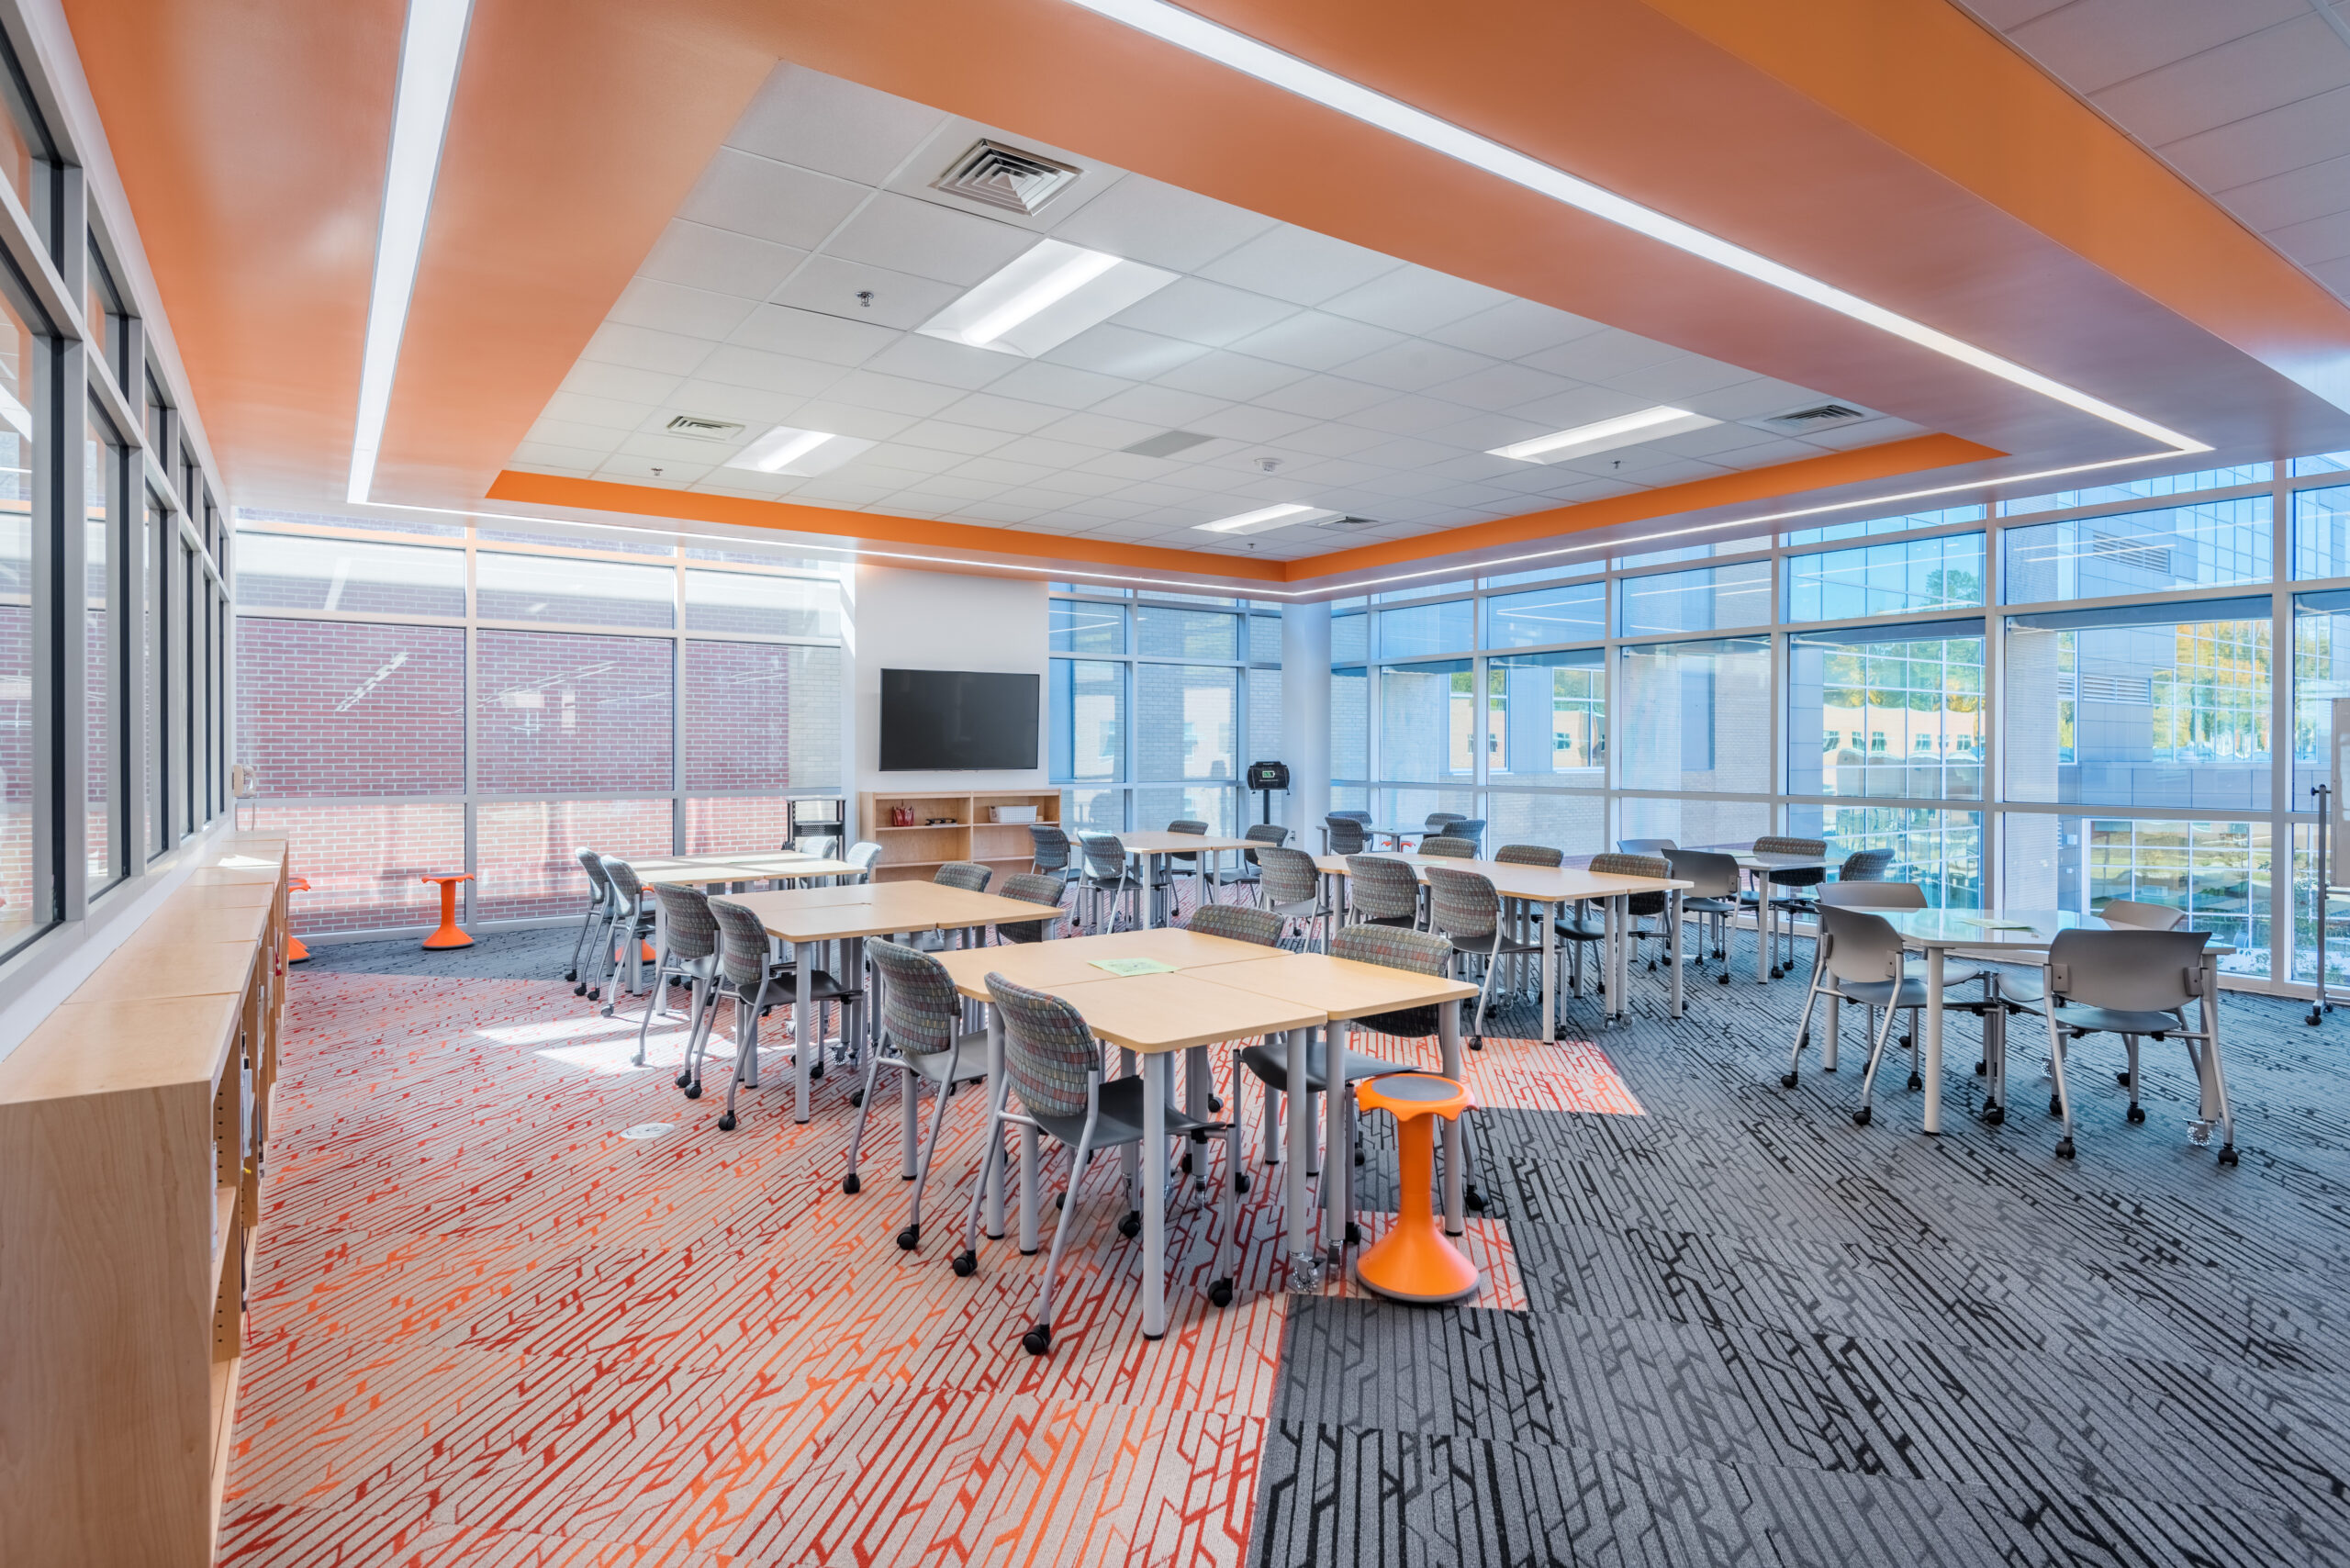 Fuquay-Varina High School Study Area with Orange Ceiling Decor and Floor to Ceiling Windows